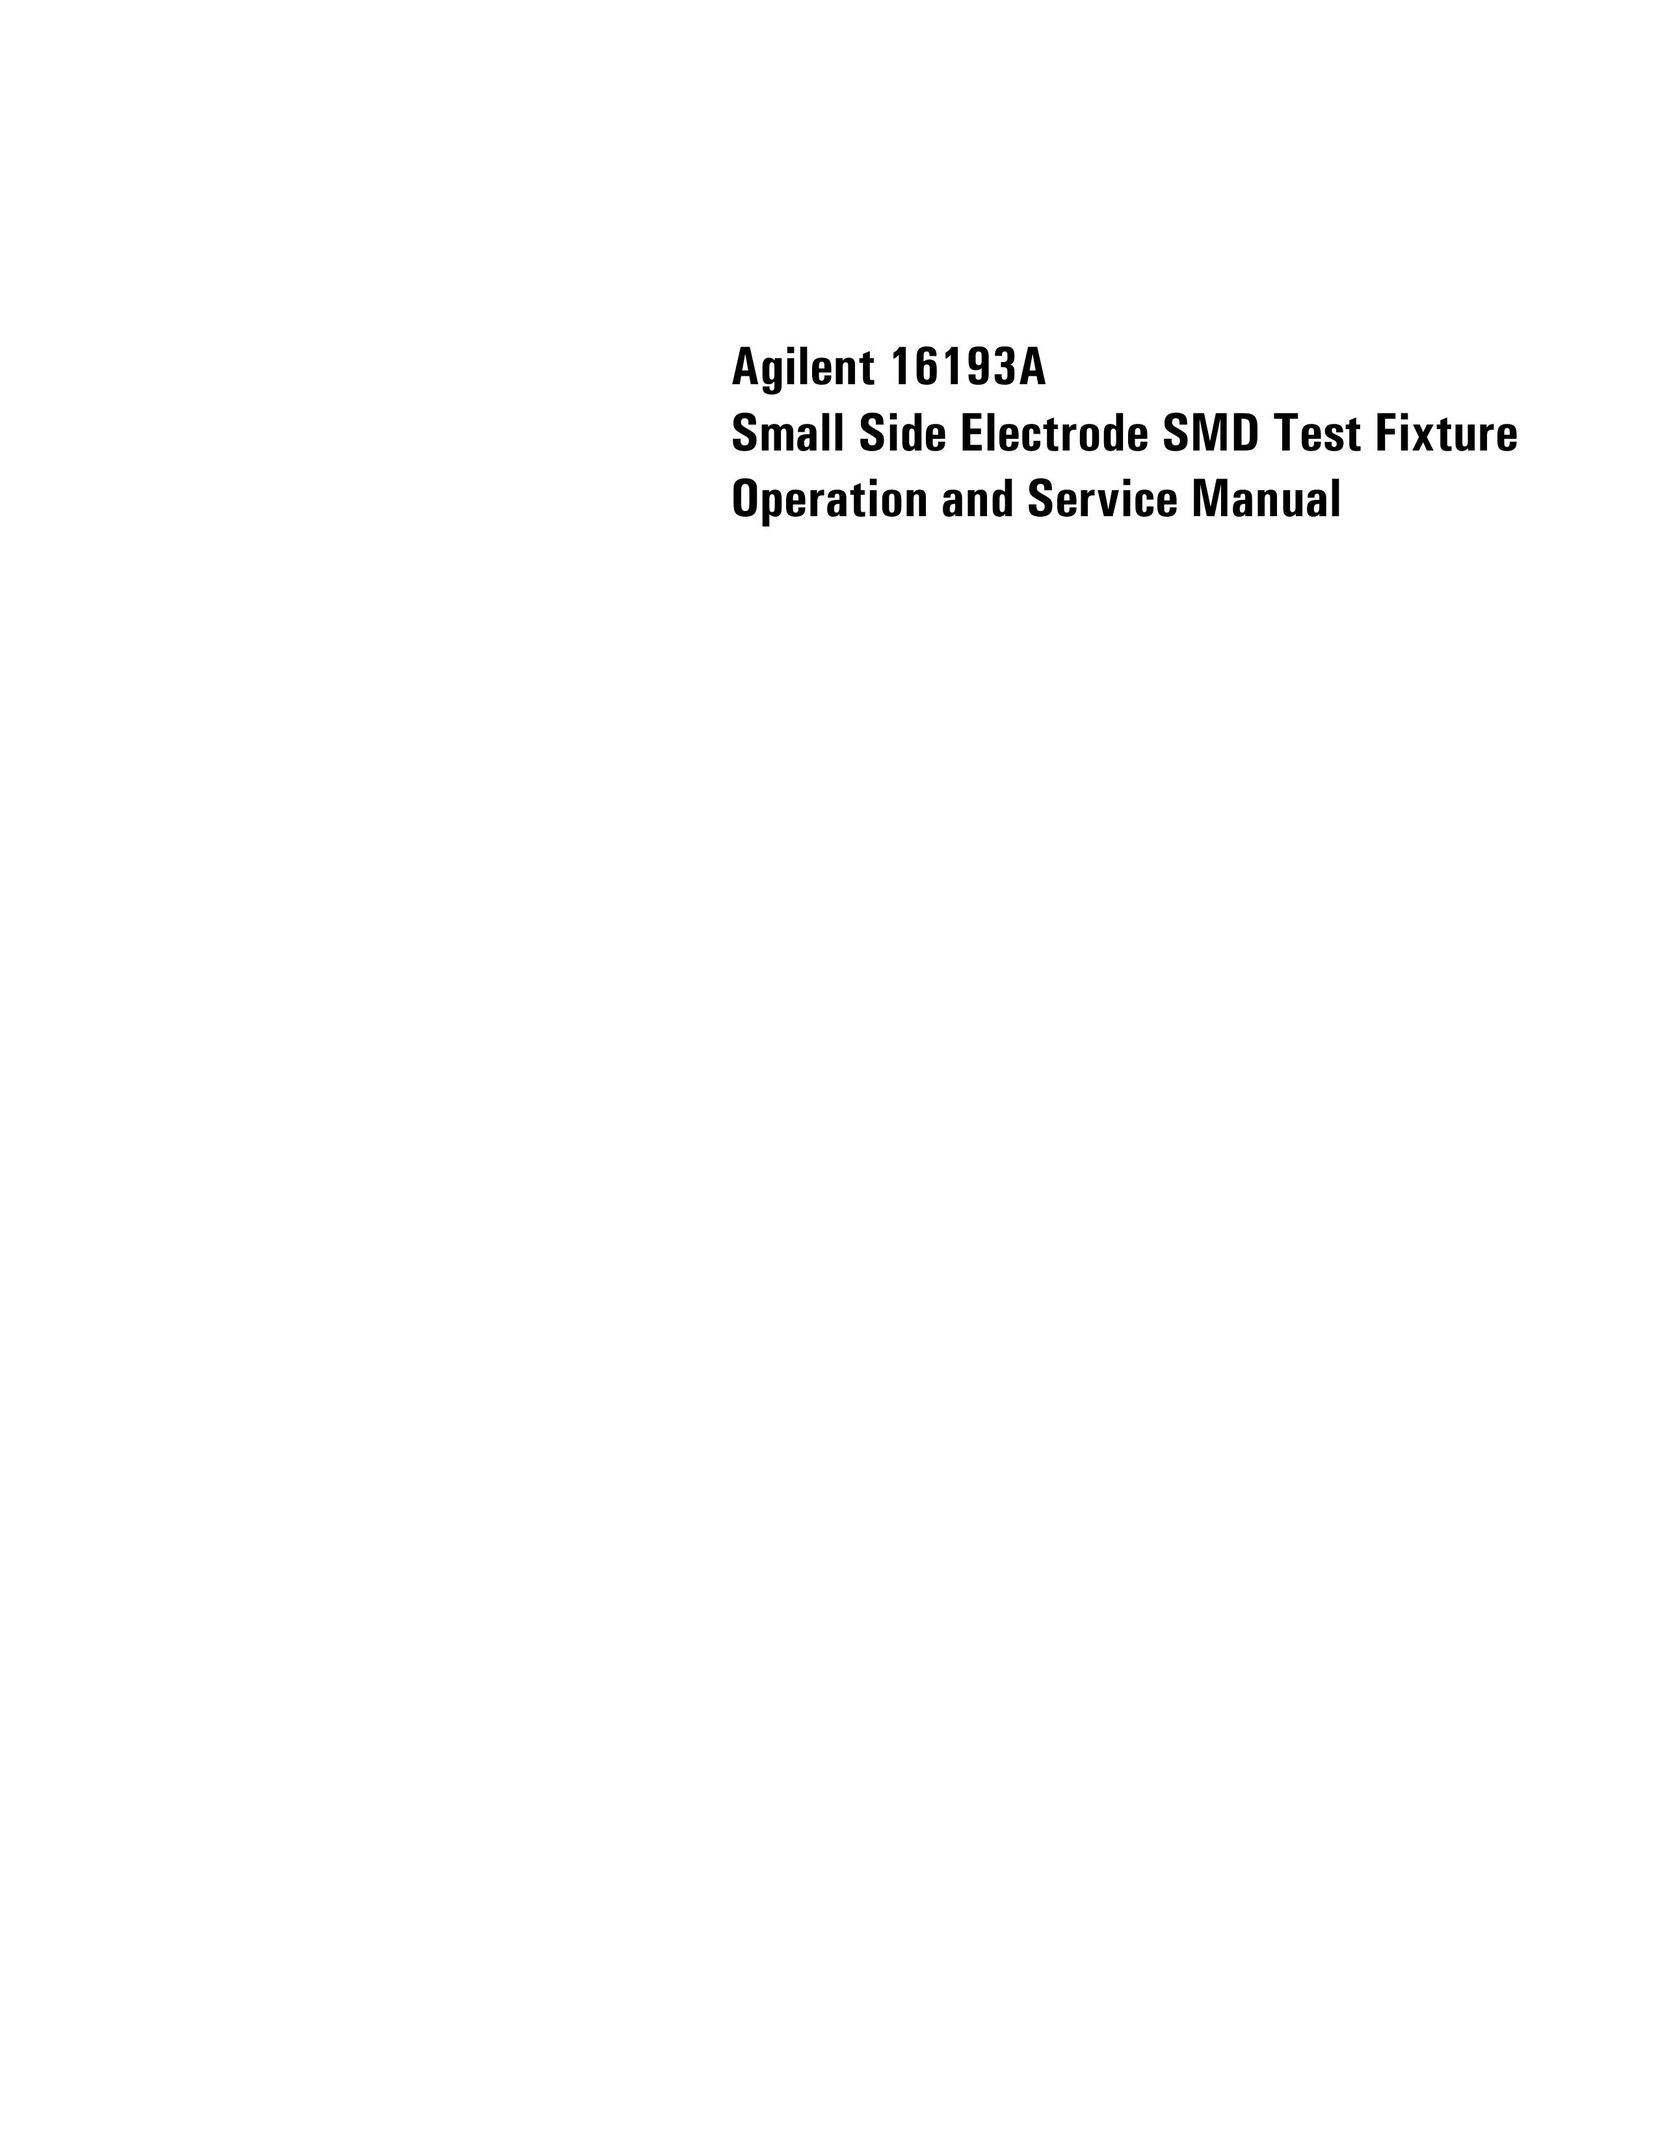 Agilent Technologies 16193A Saw User Manual